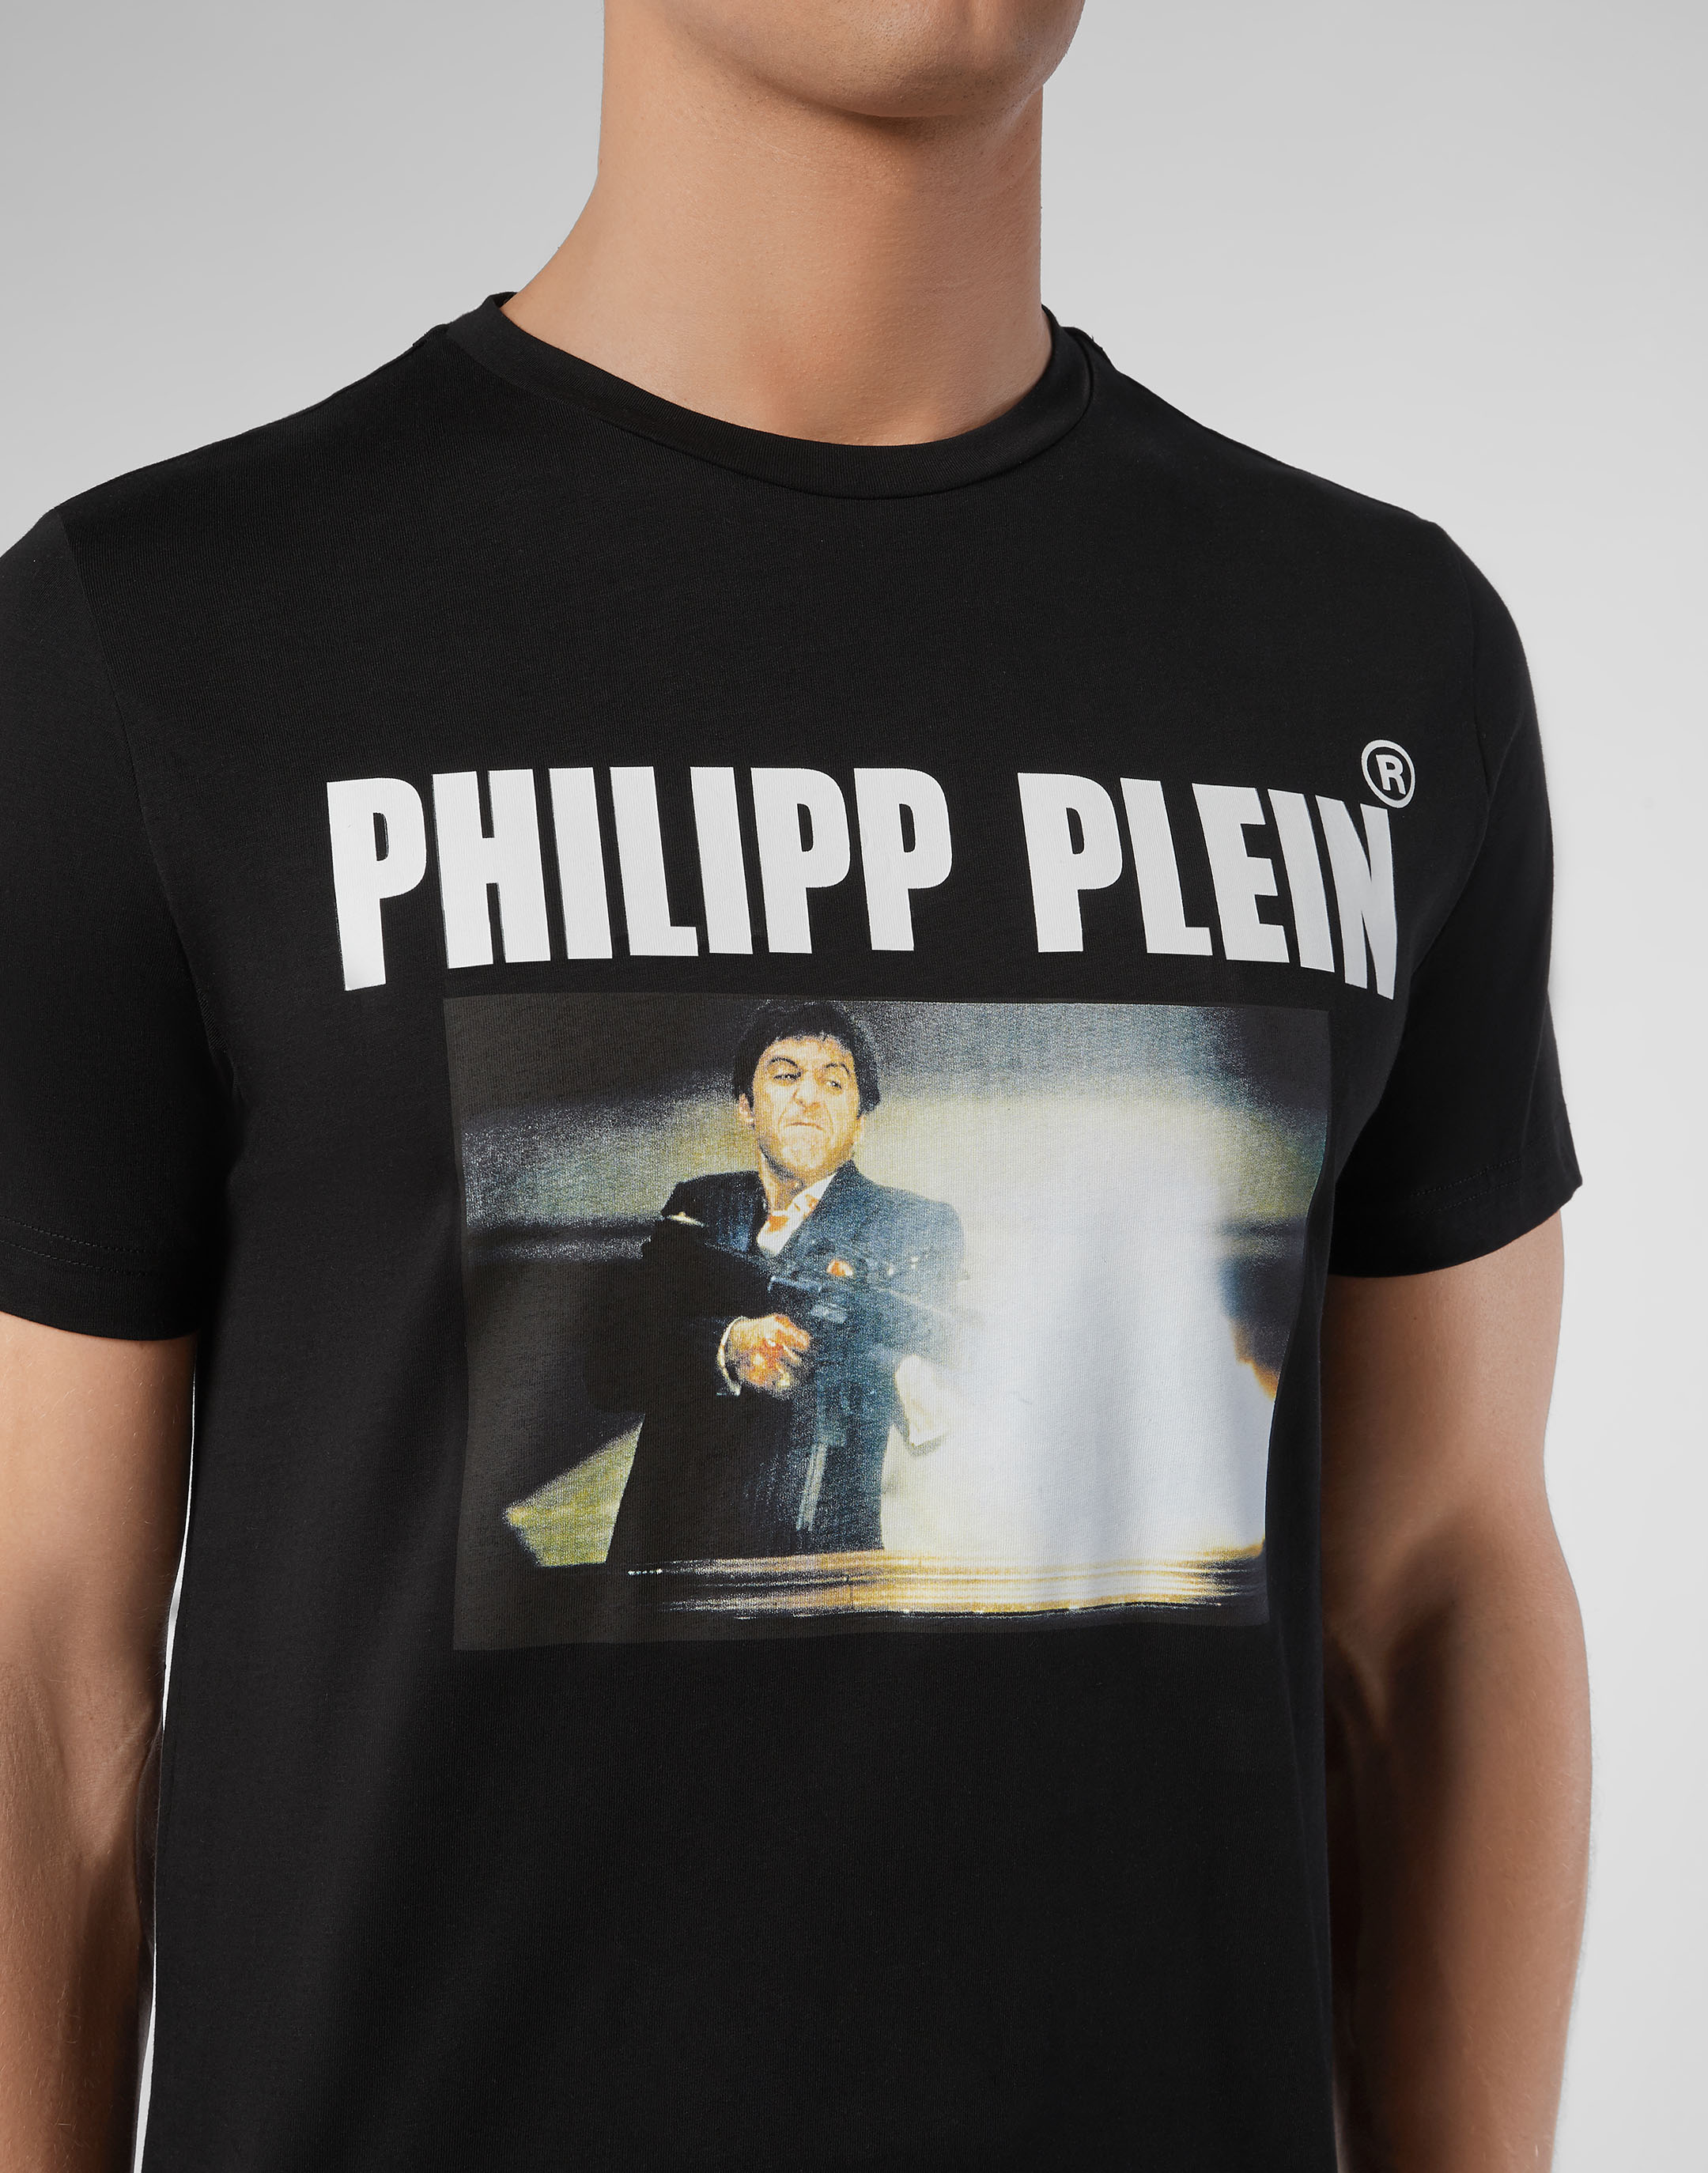 philipp plein t shirt scarface